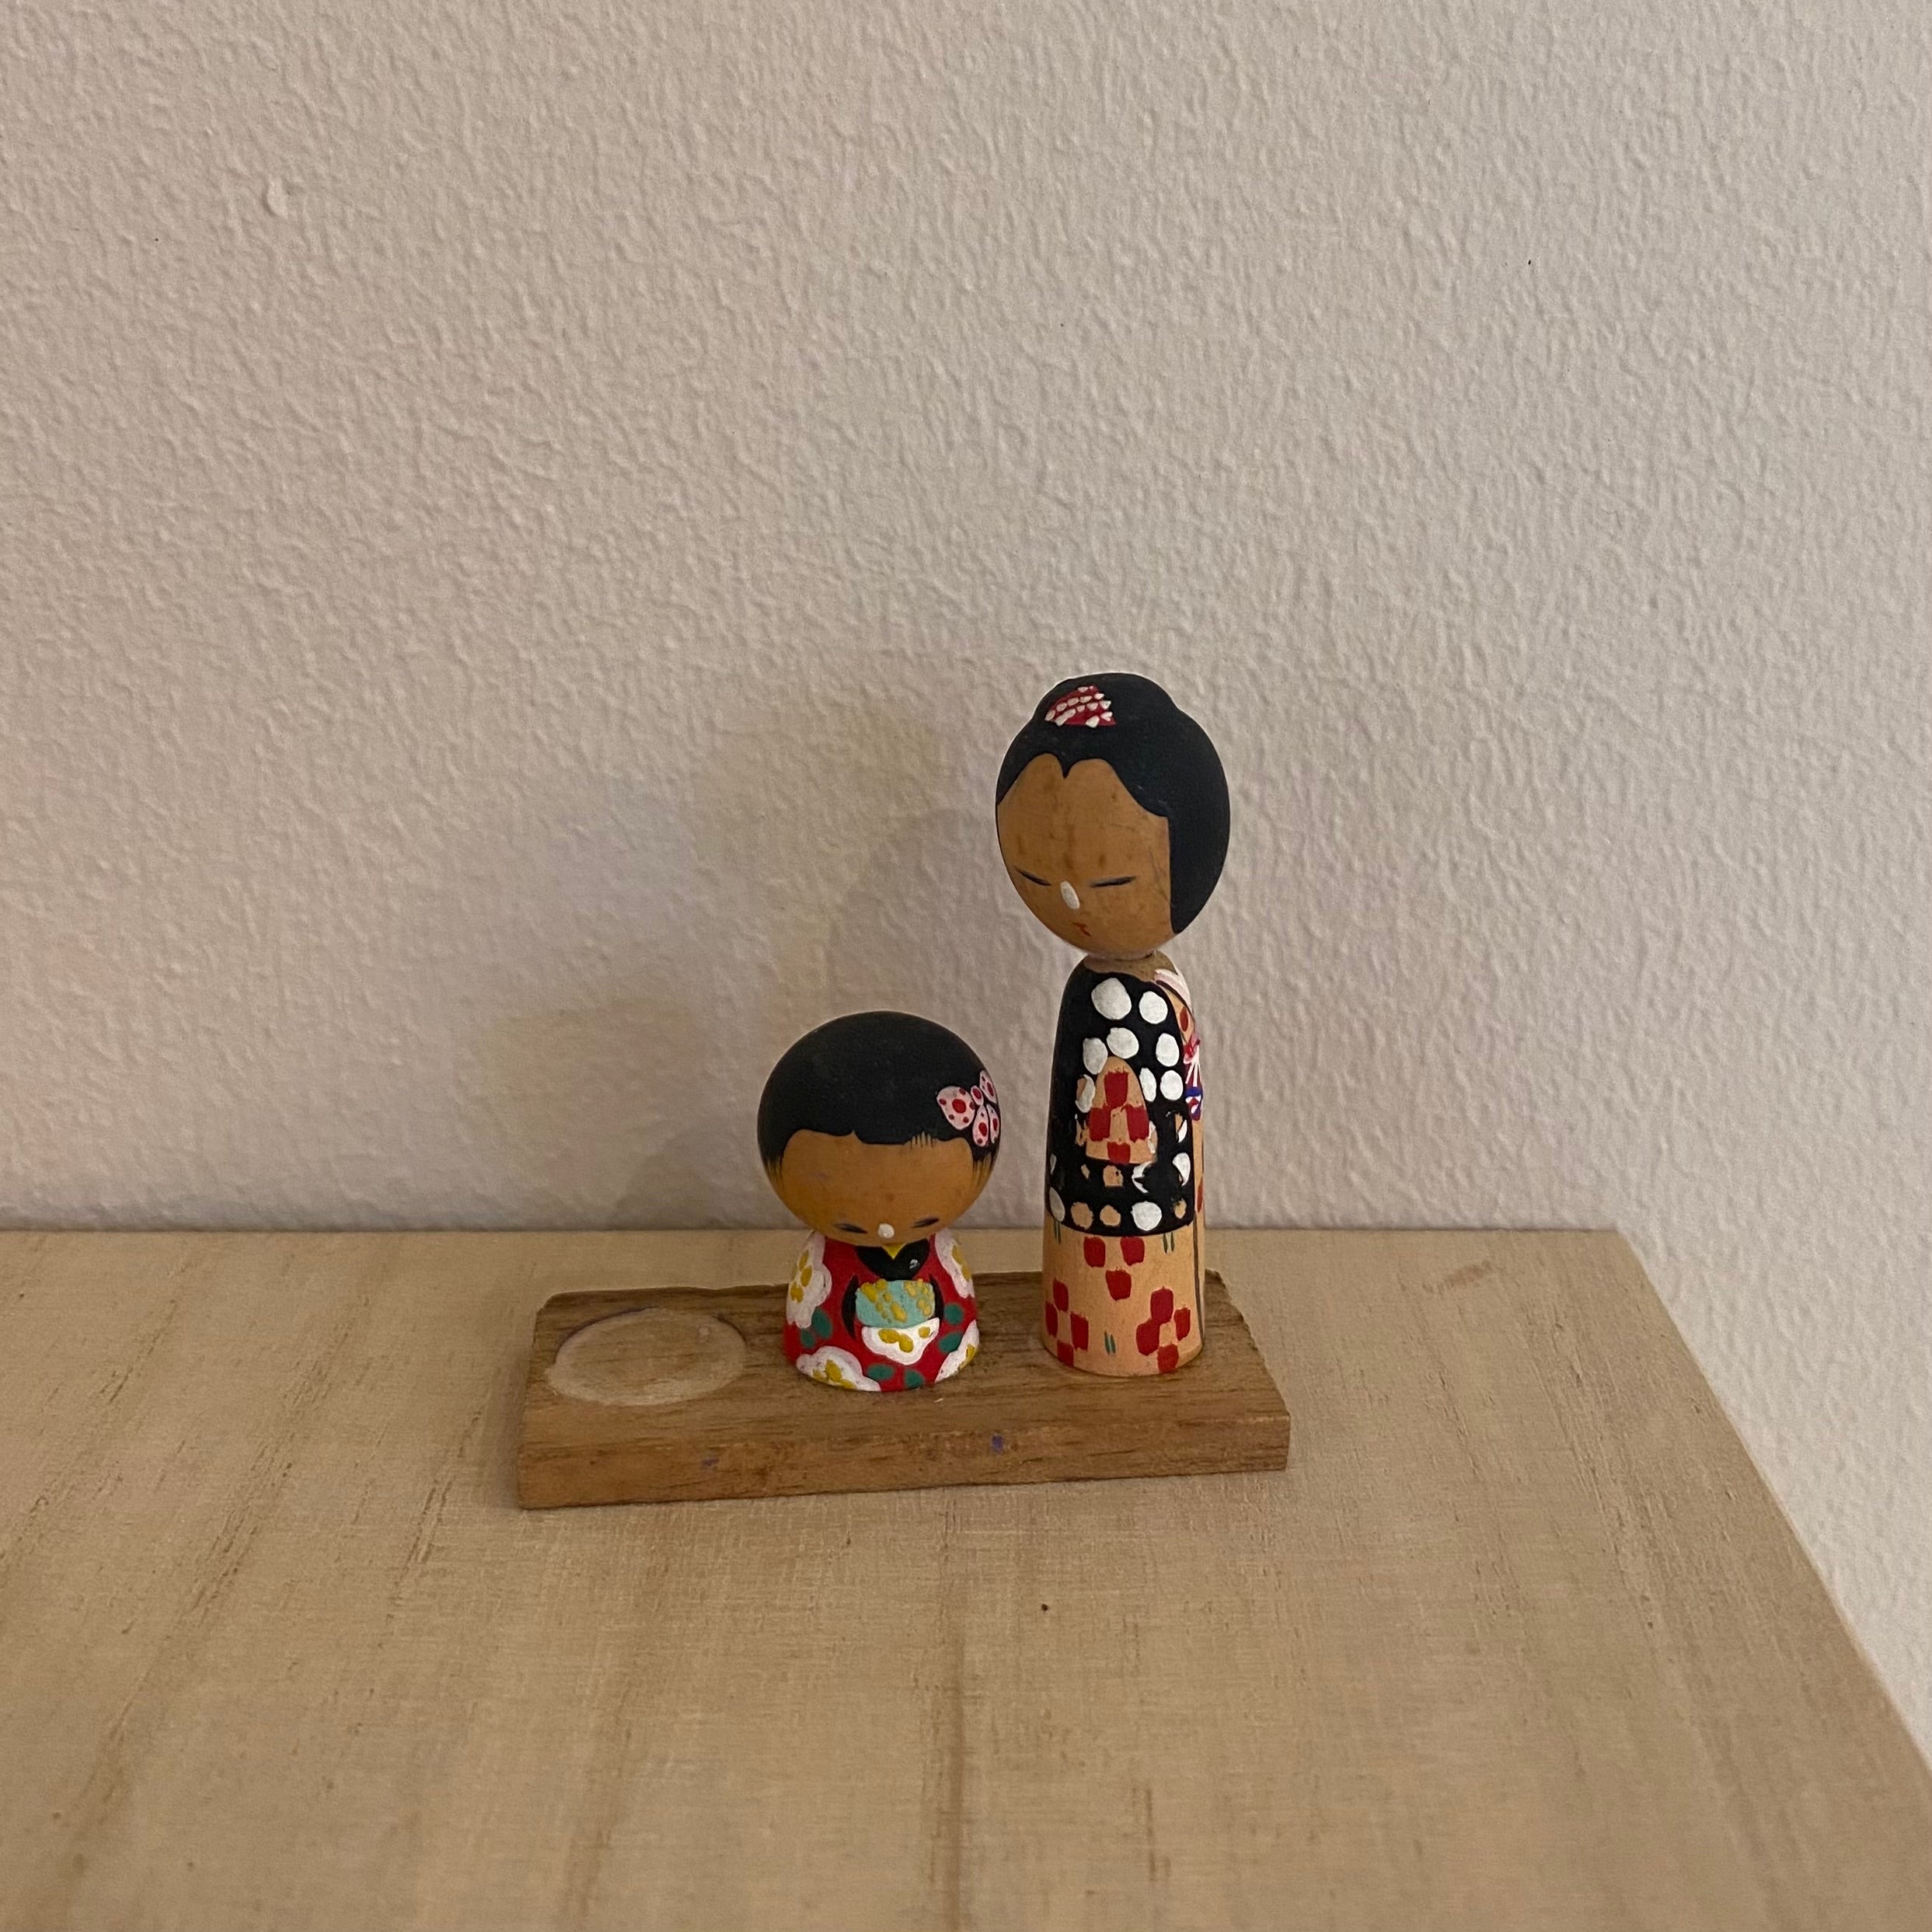 Small unique wooden figurines